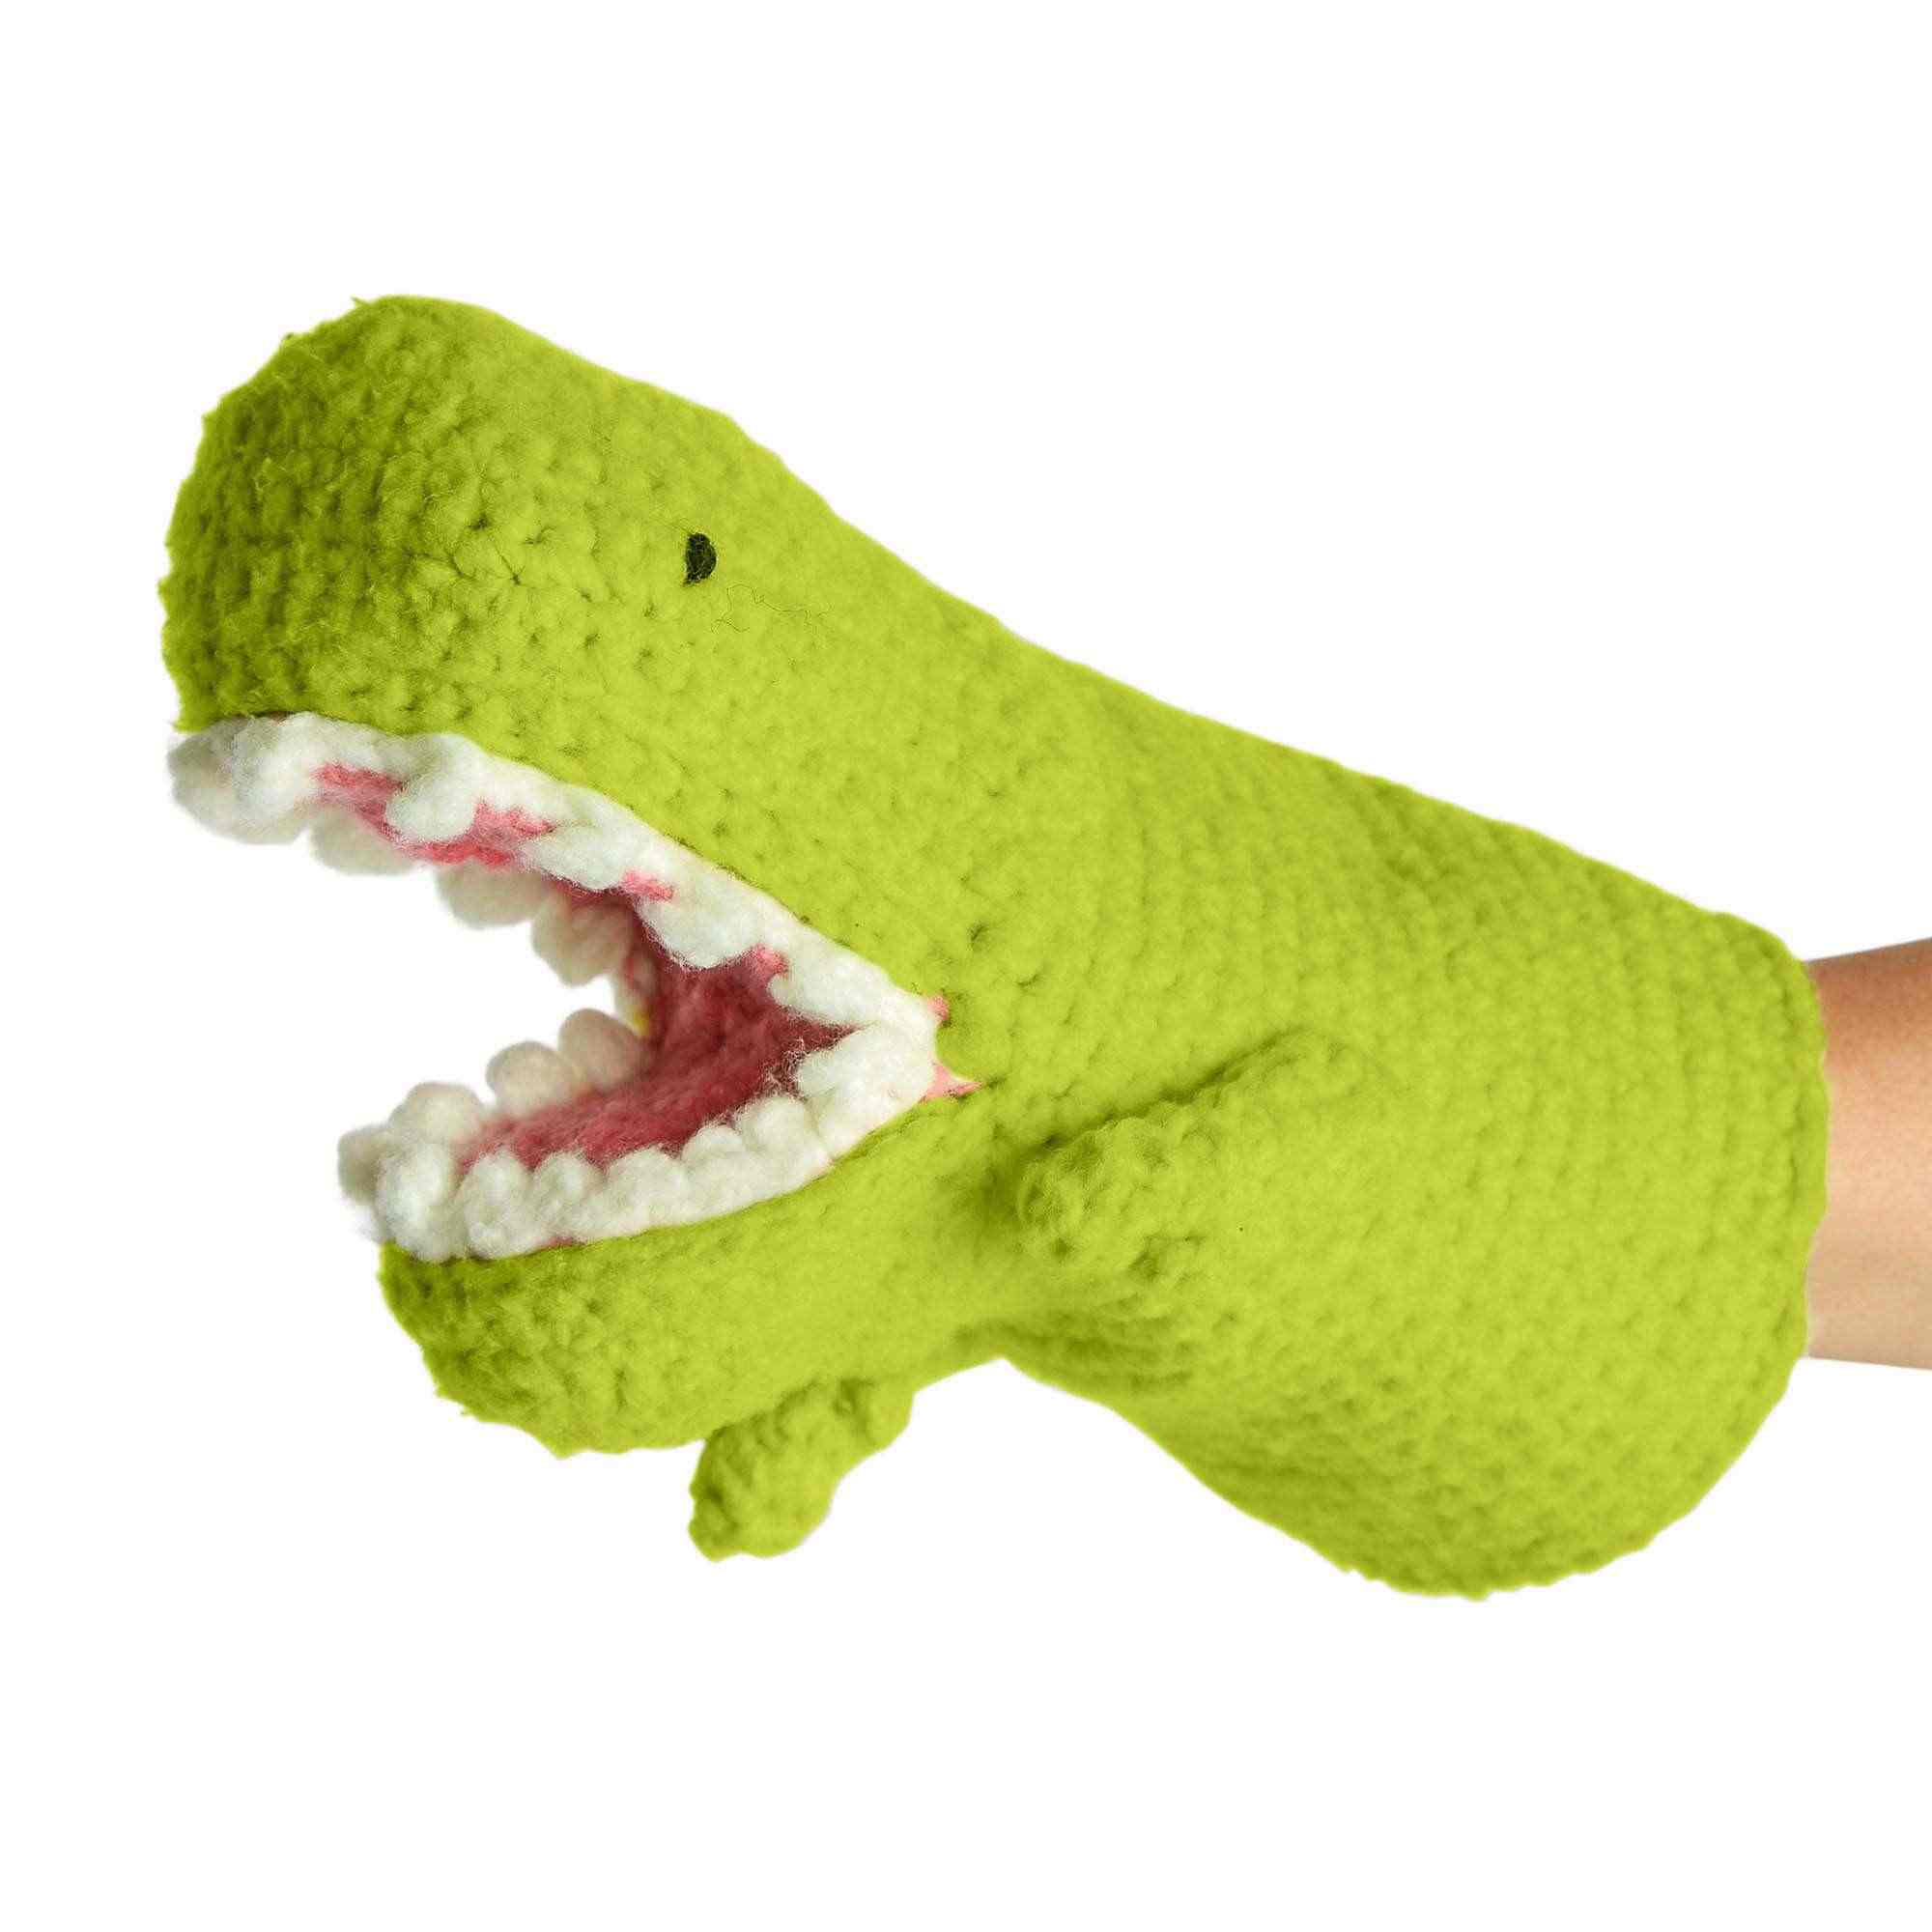 Crochet Dinosaur Puppet - Free Crochet Pattern